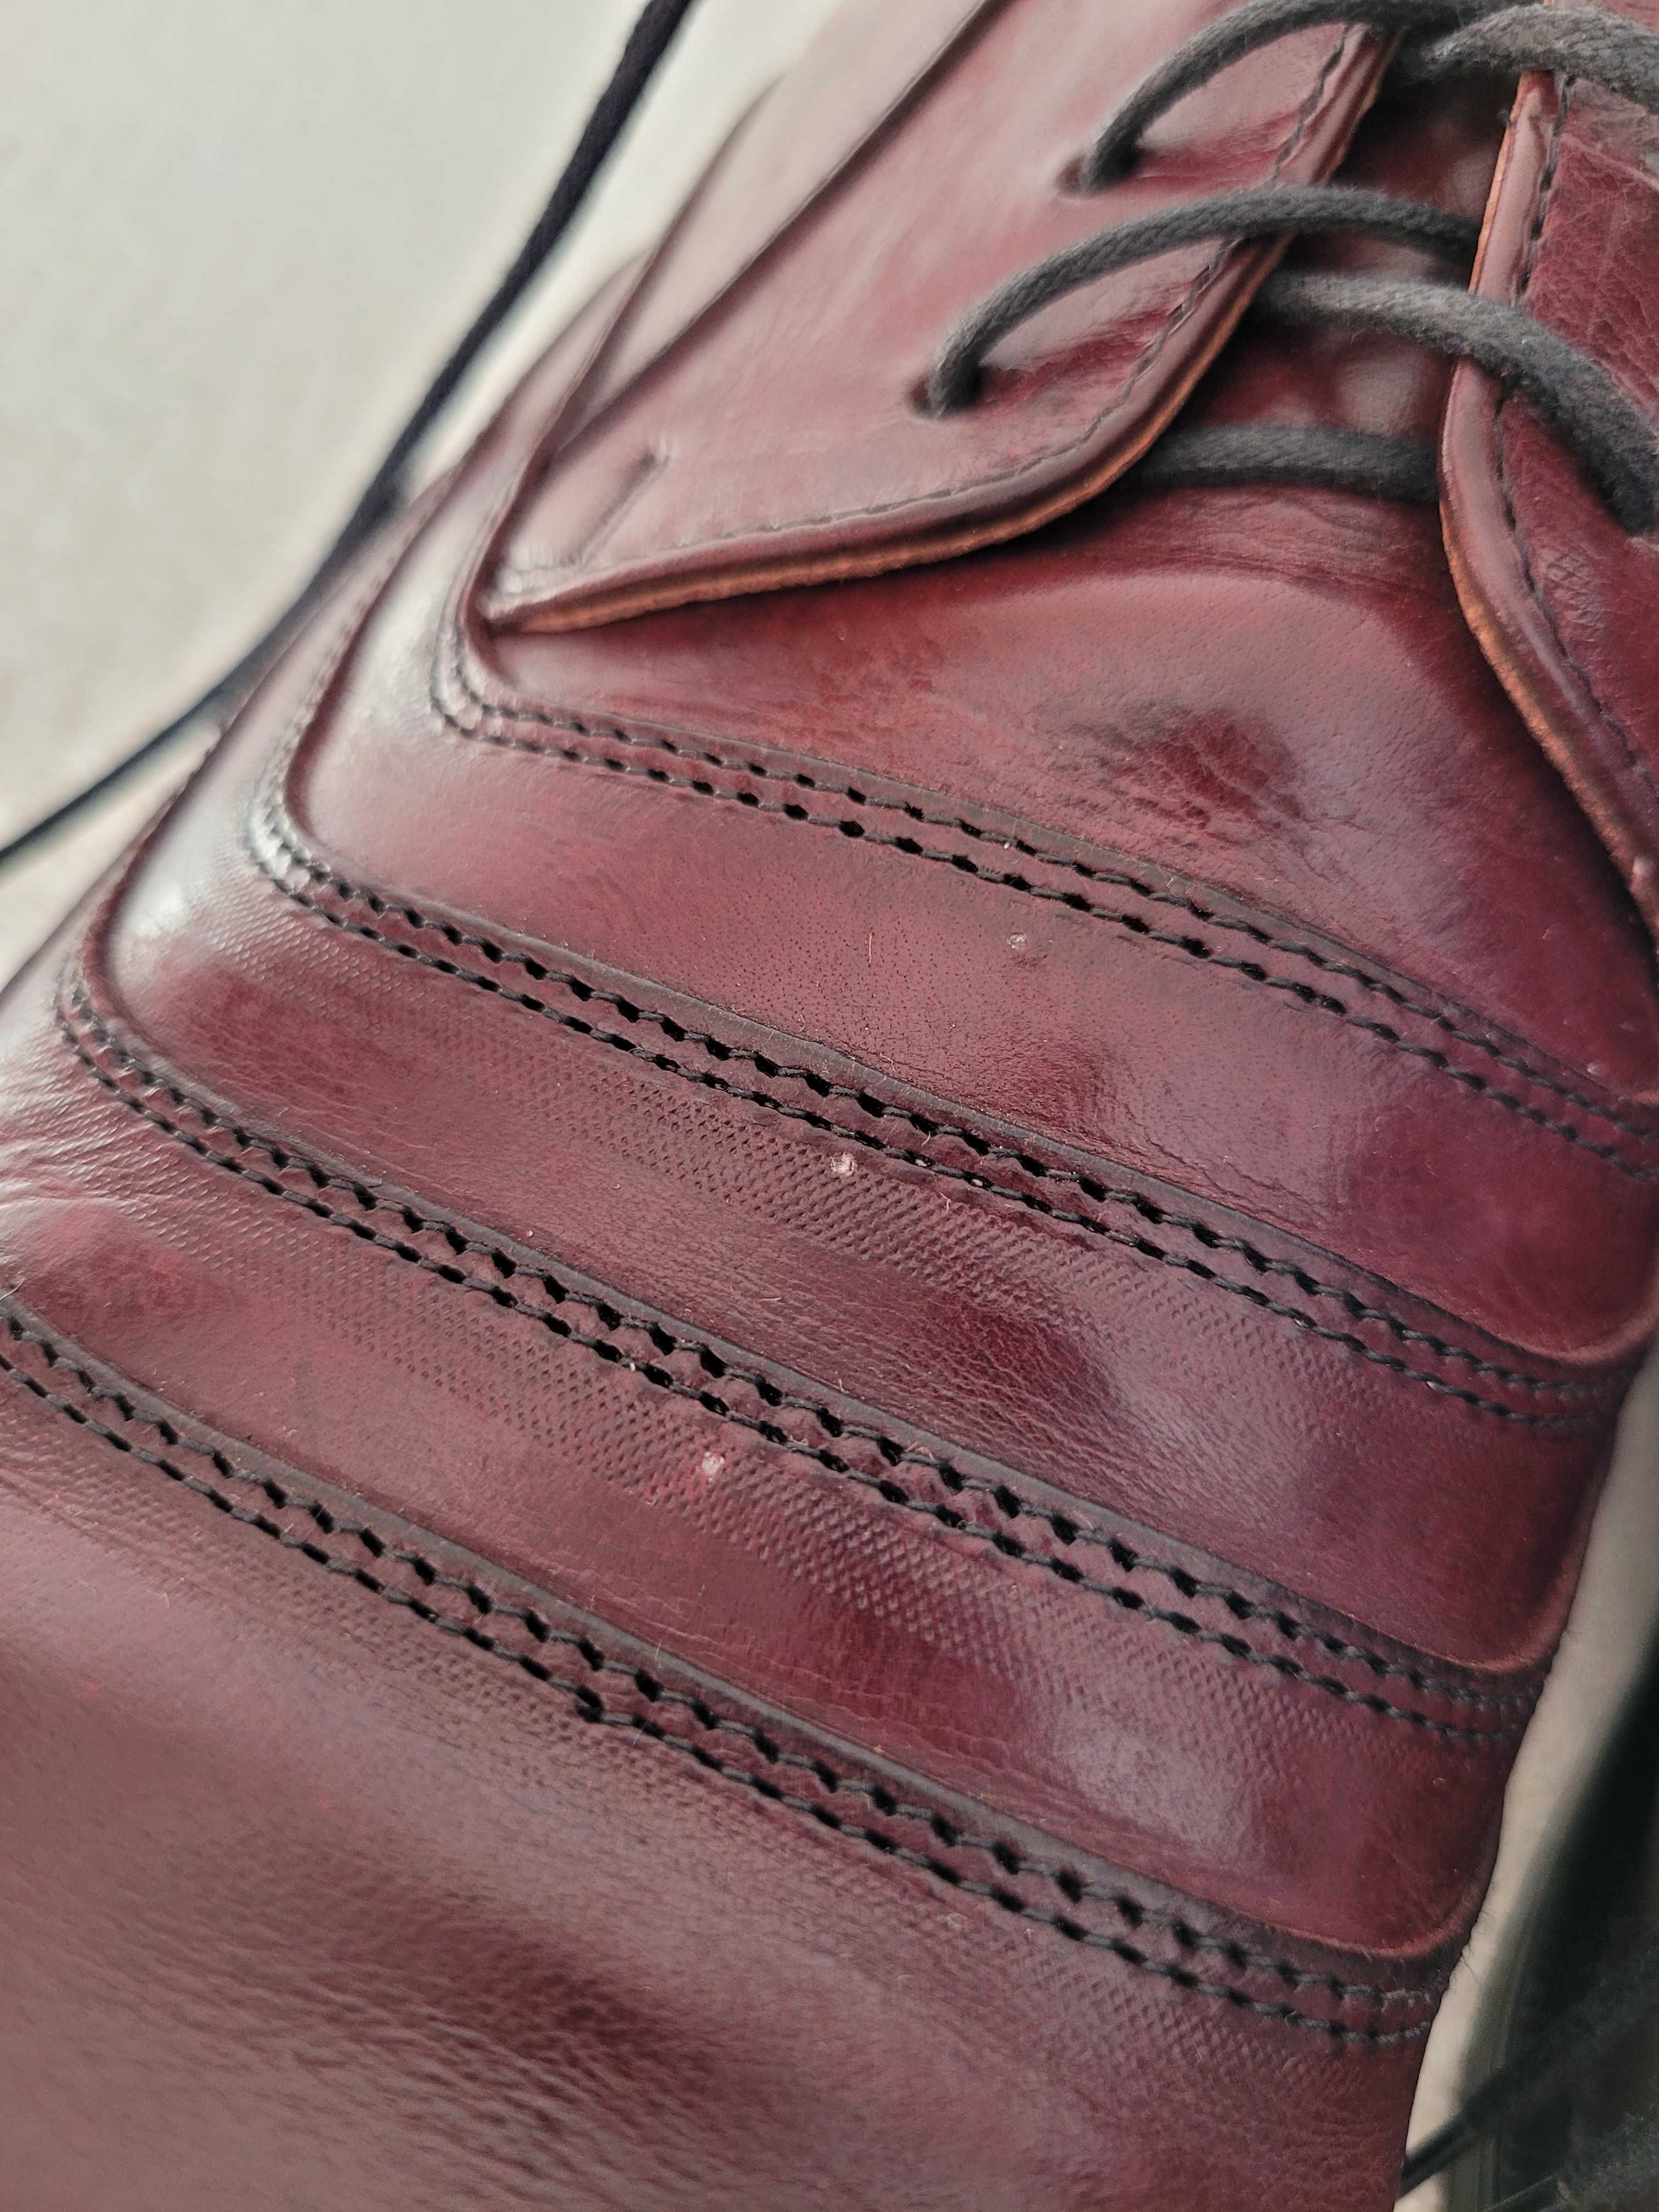 Eleganckie garniturowe męskie skórzane buty burgundowe Piero Bruni 45